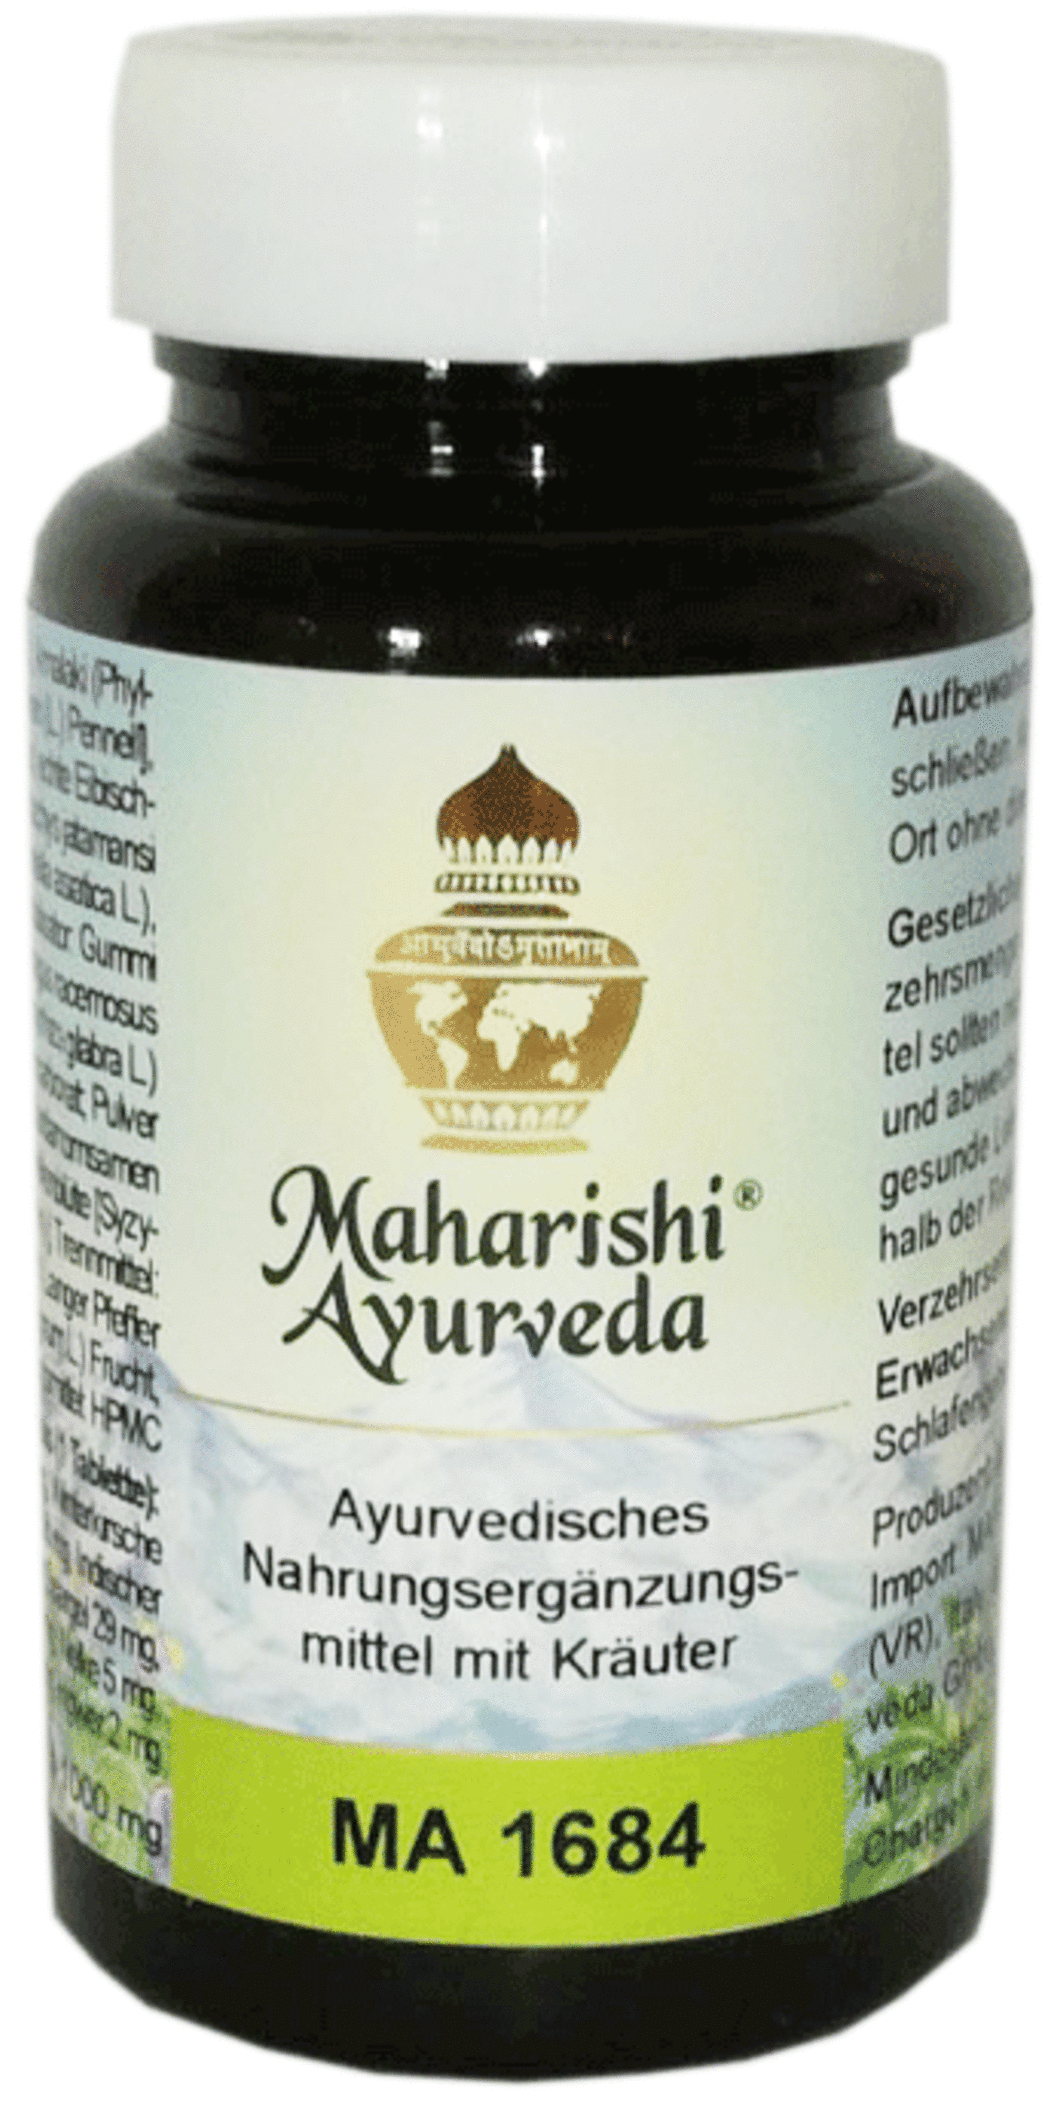 Maharishi Ayurveda MA 1684